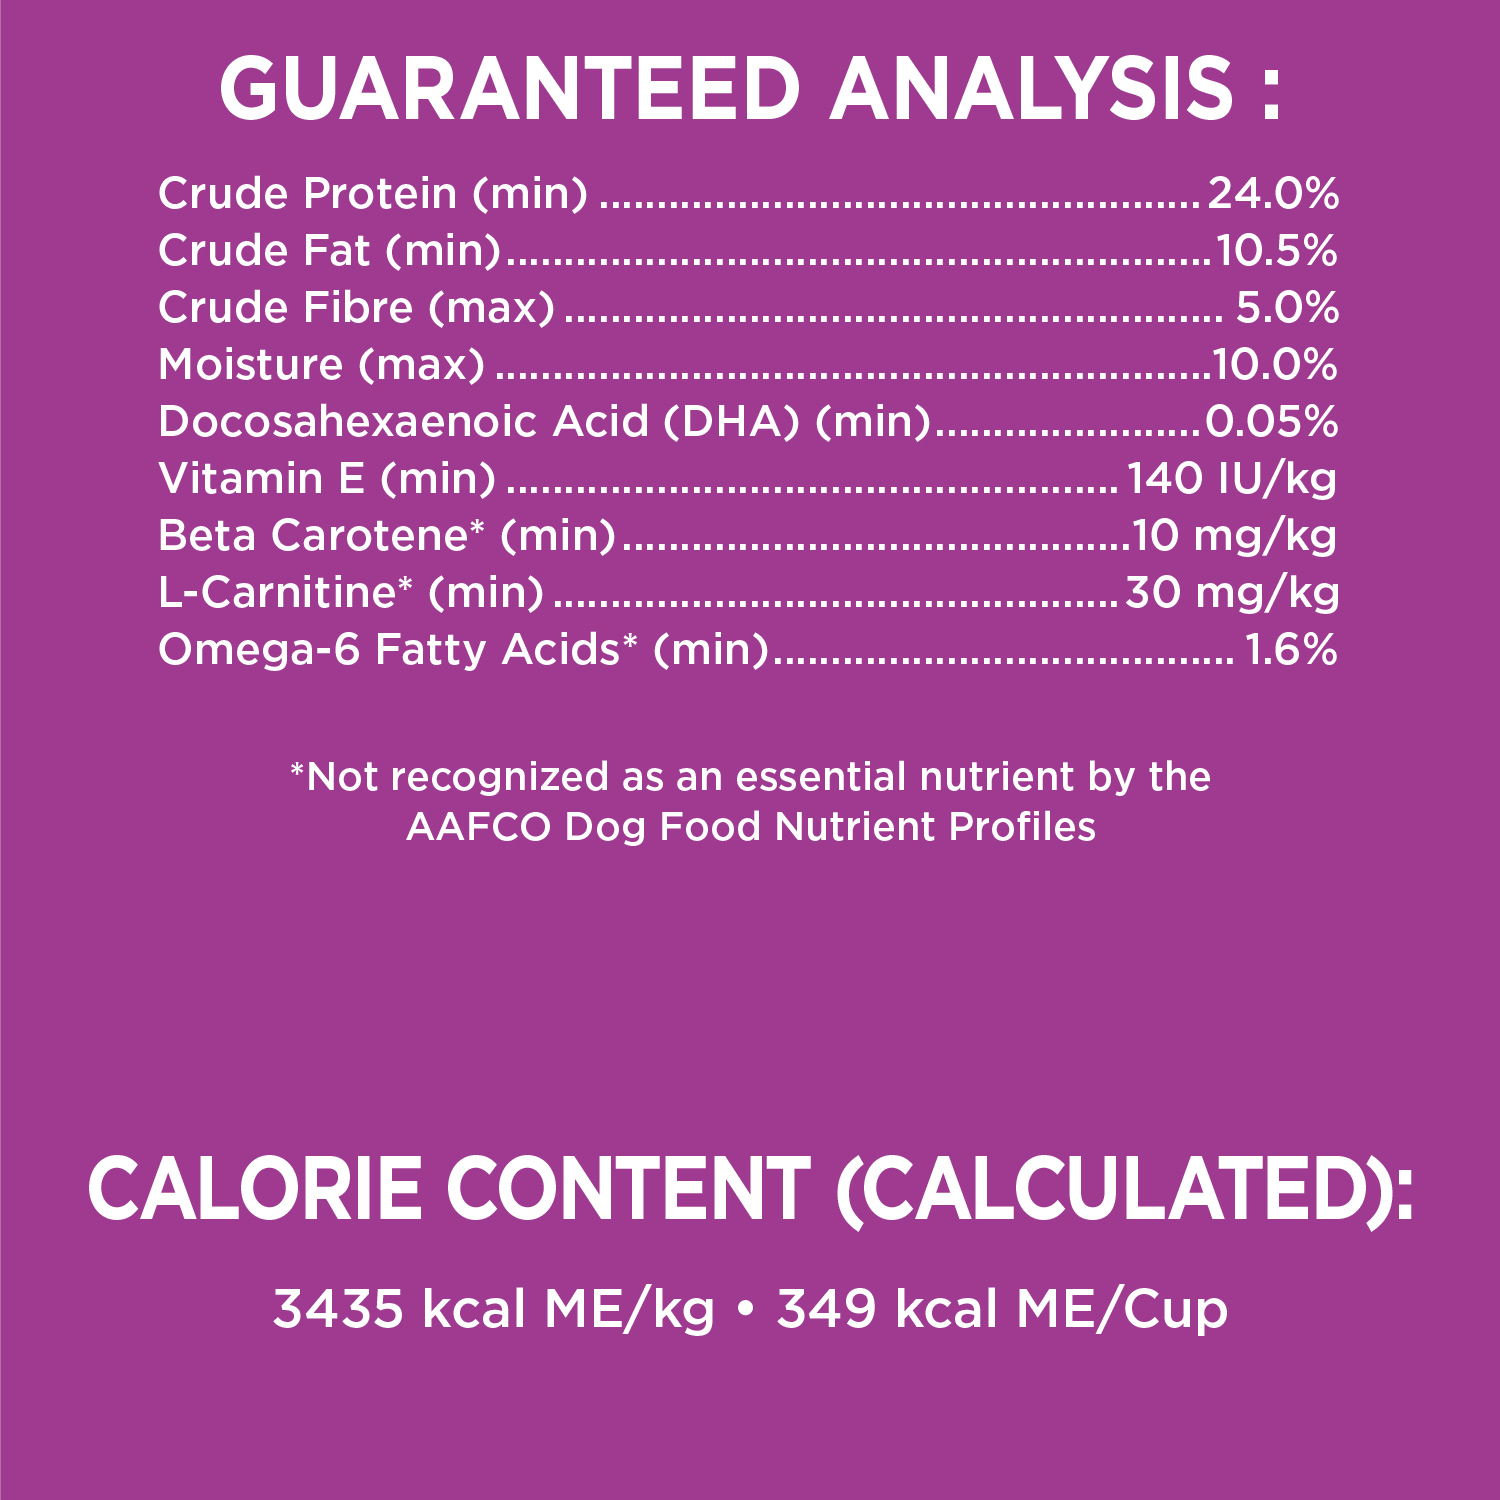 IAMS™ HEALTHY AGING™ Adult Dry Dog Food guaranteed analysis image